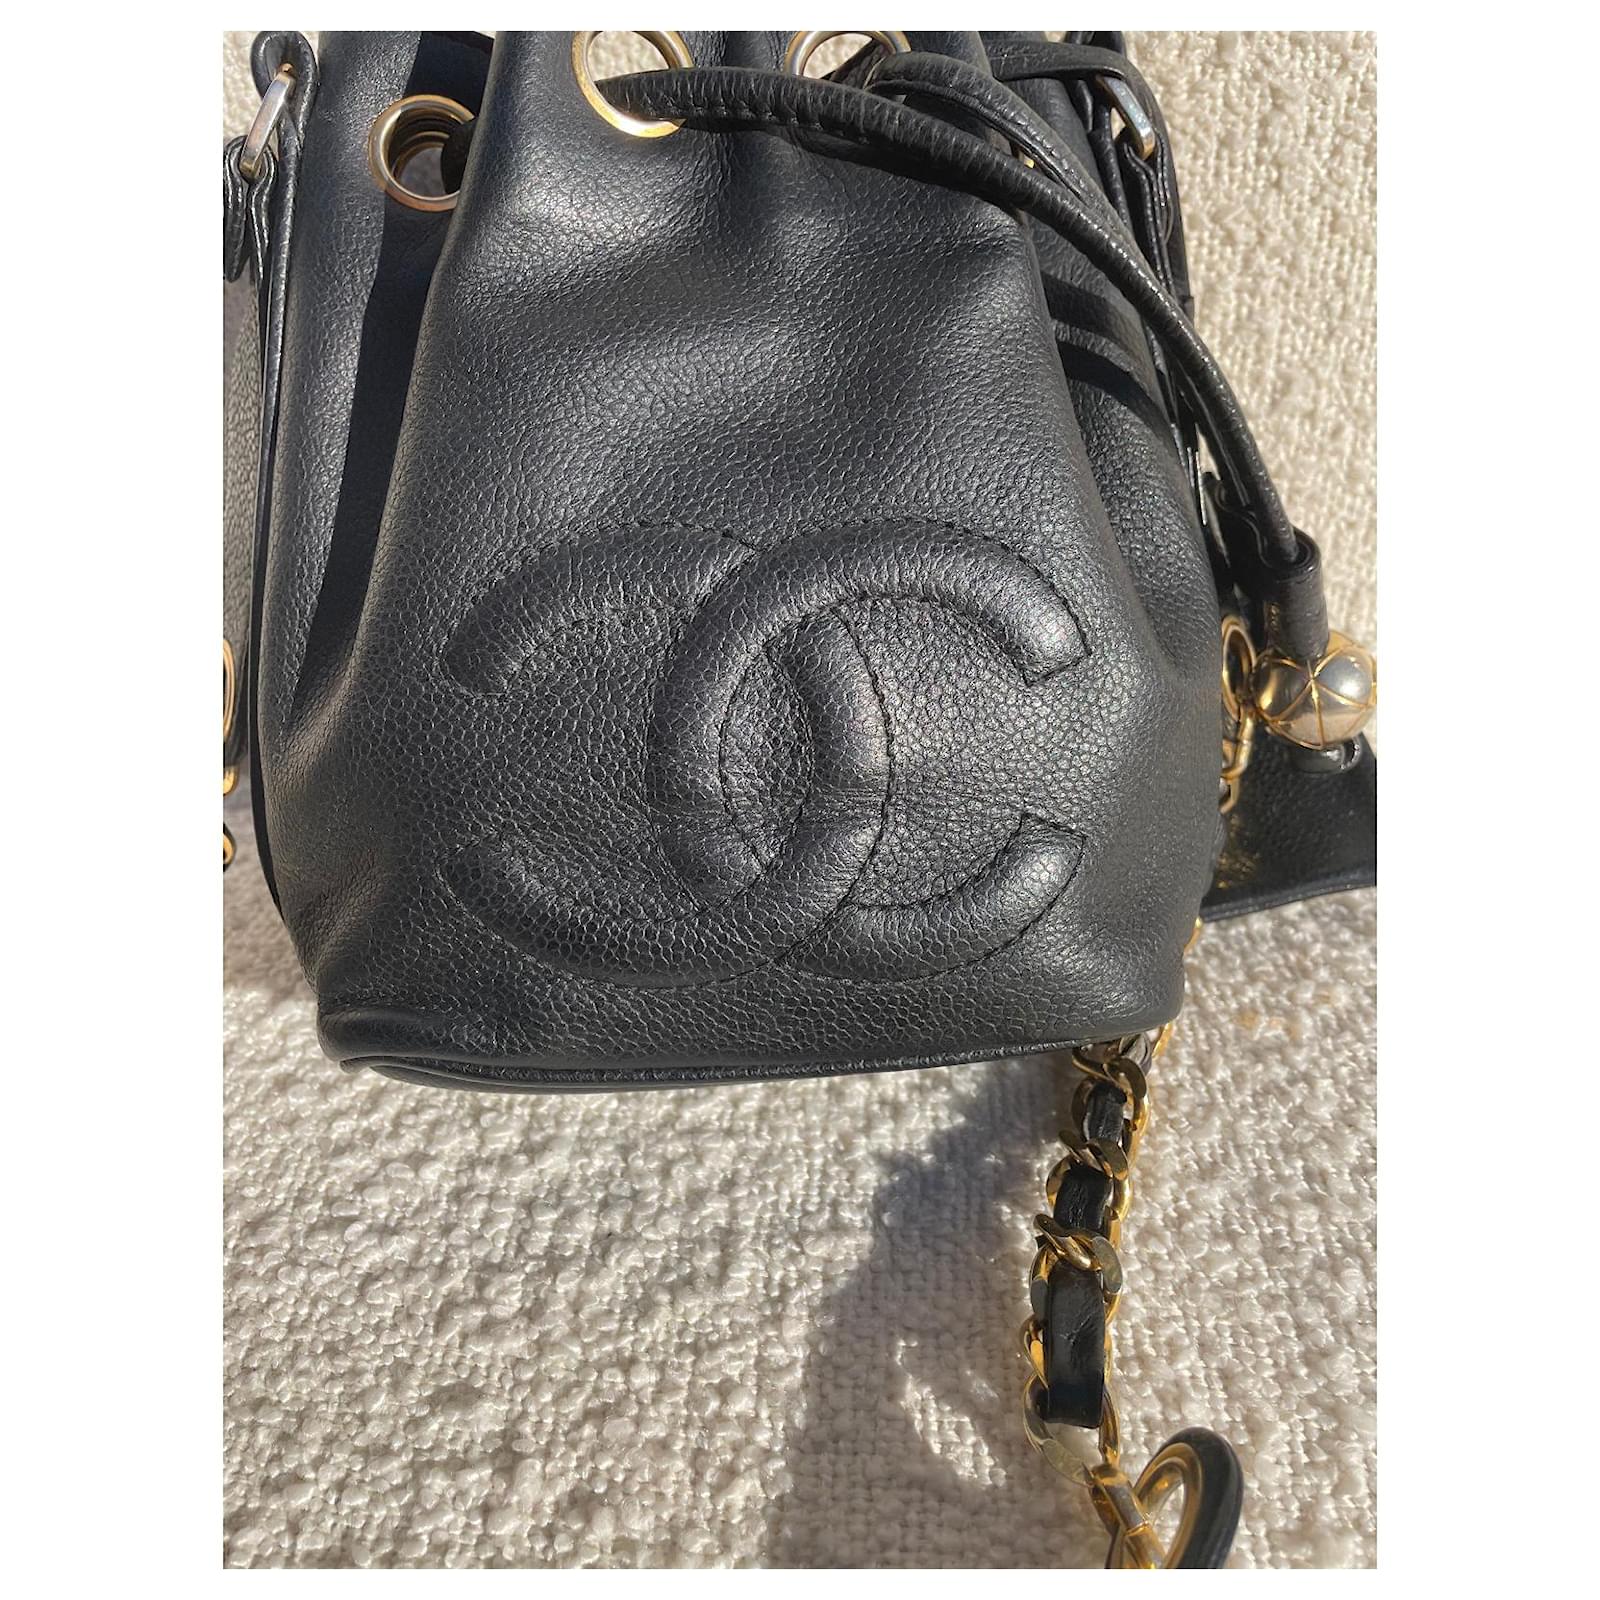 Superb Chanel Bucket Bucket Bag Gabrielle Black Caviar Leather.